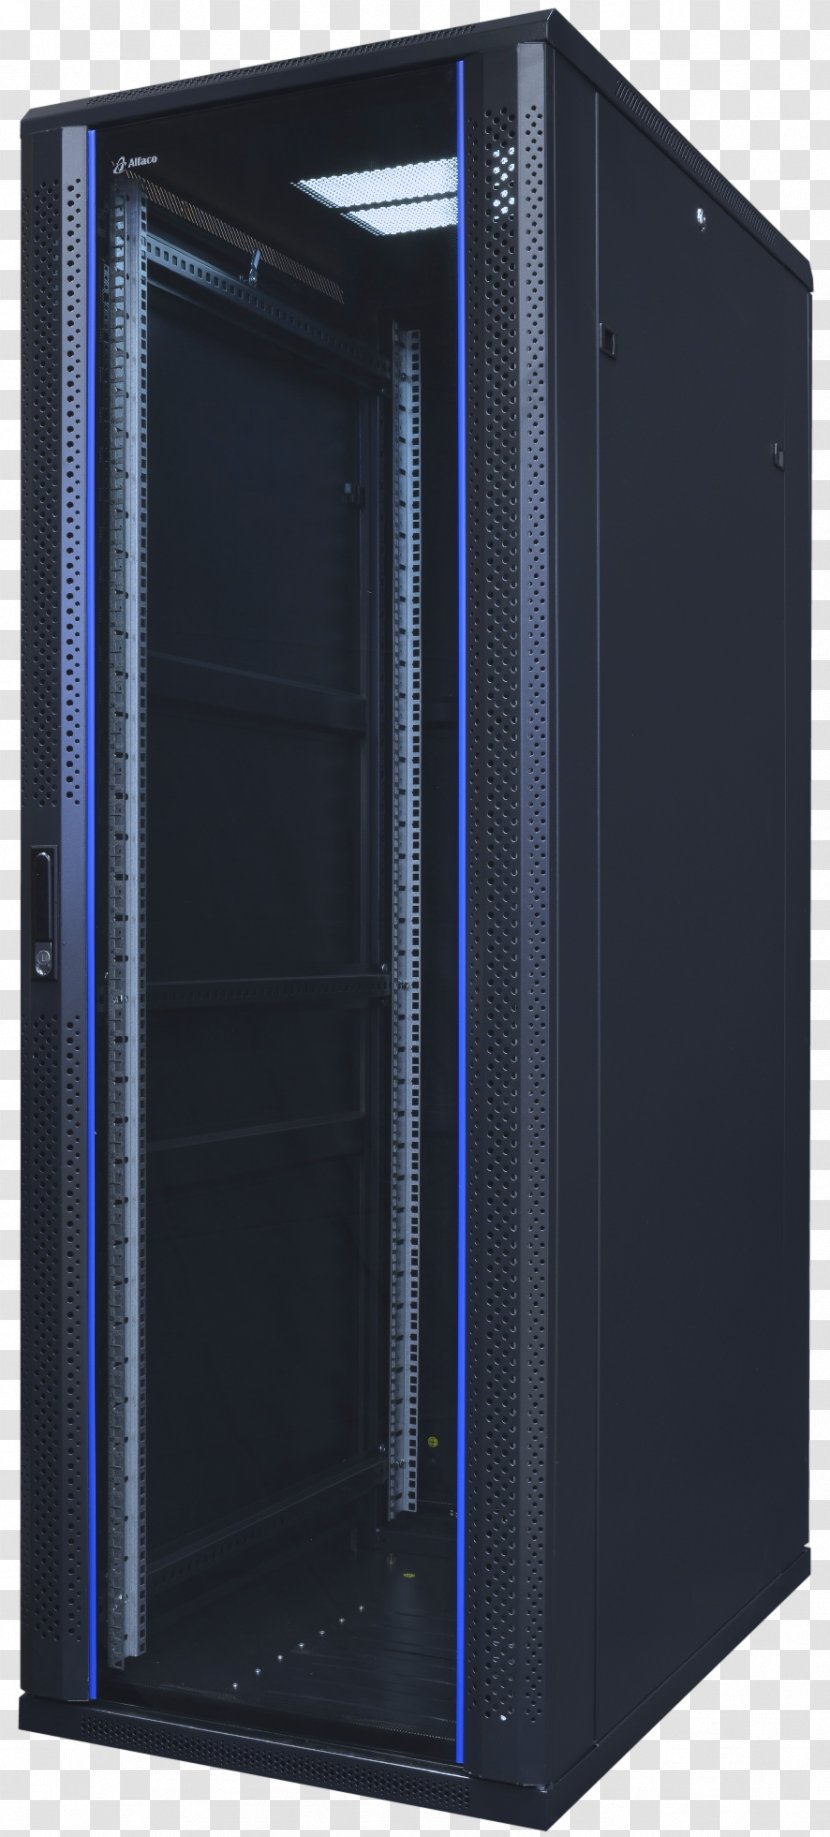 Computer Cases & Housings 19-inch Rack Sigmatex Holland B.V. Servers Entree - Bv Transparent PNG